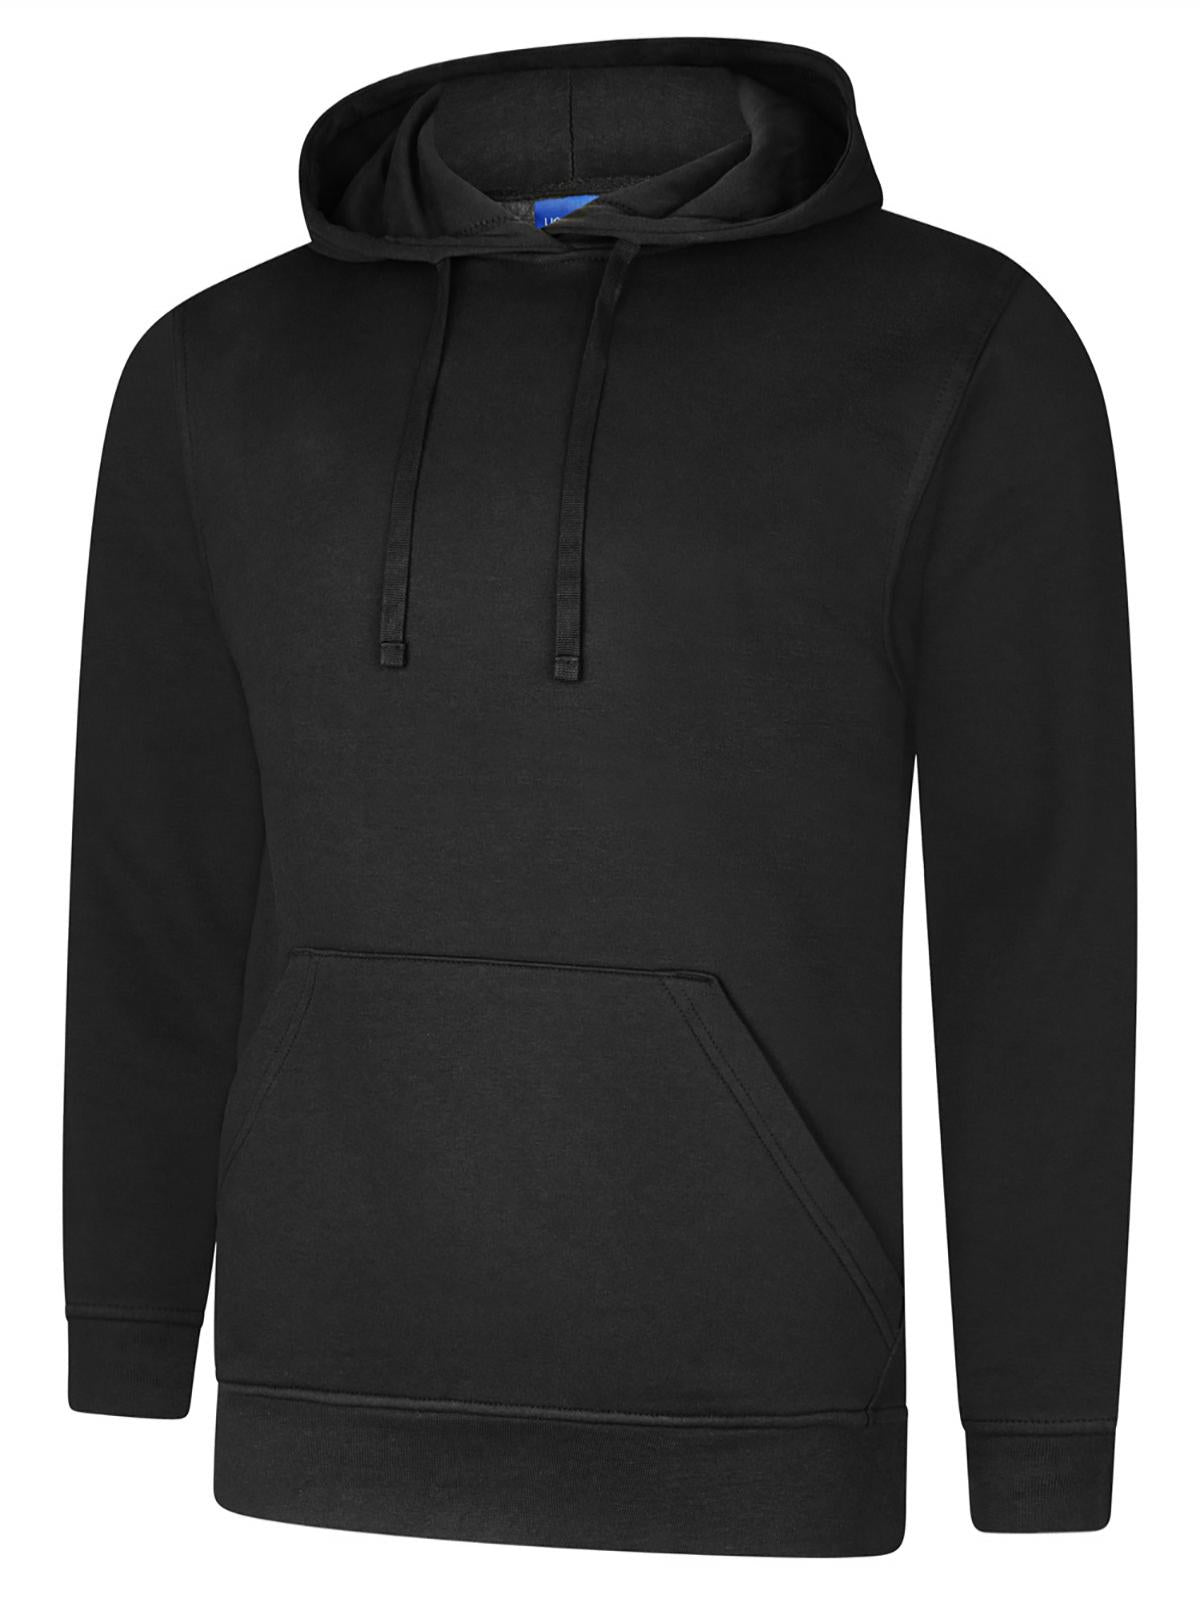 Uneek Deluxe Hooded Sweatshirt UC509 - Black